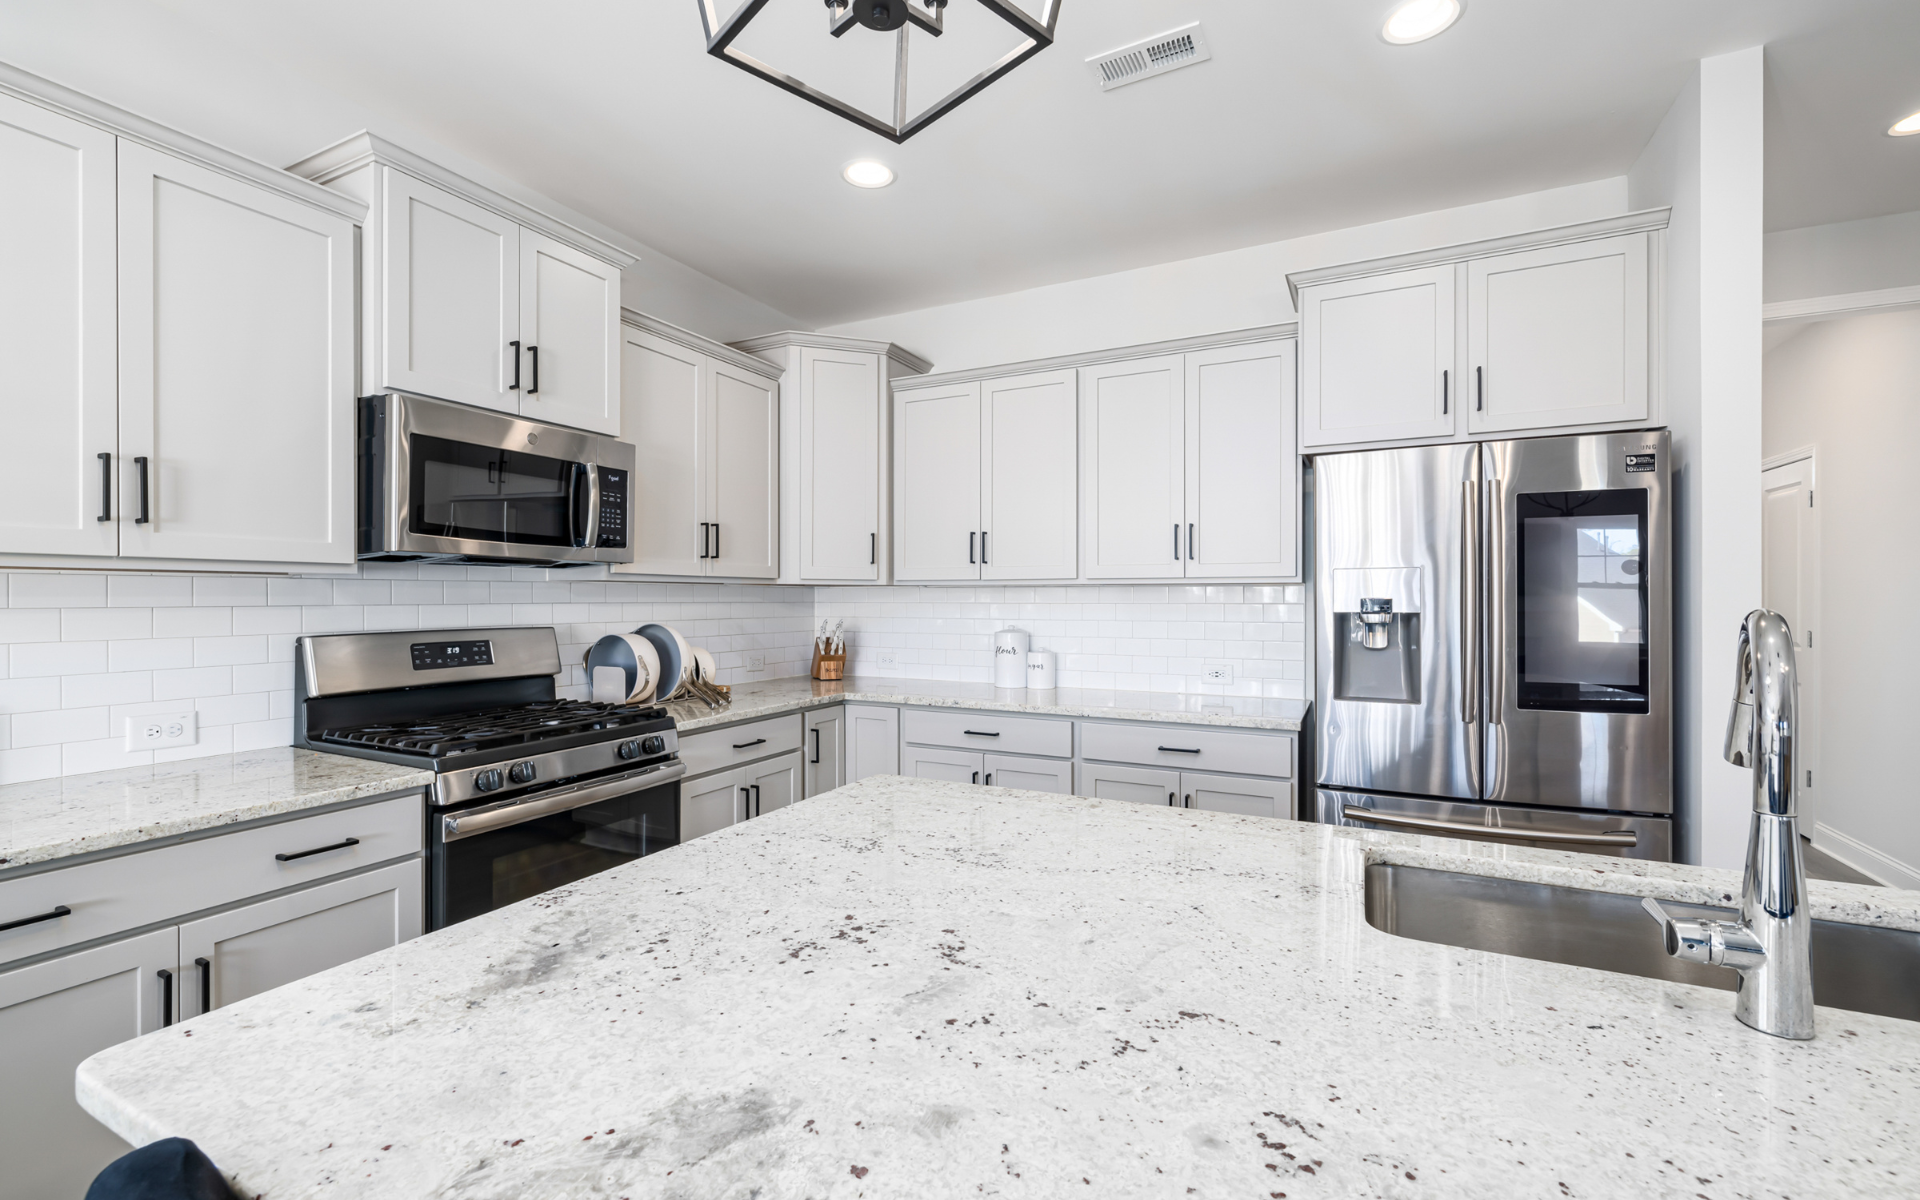 Elegant white kitchen with built-in appliances